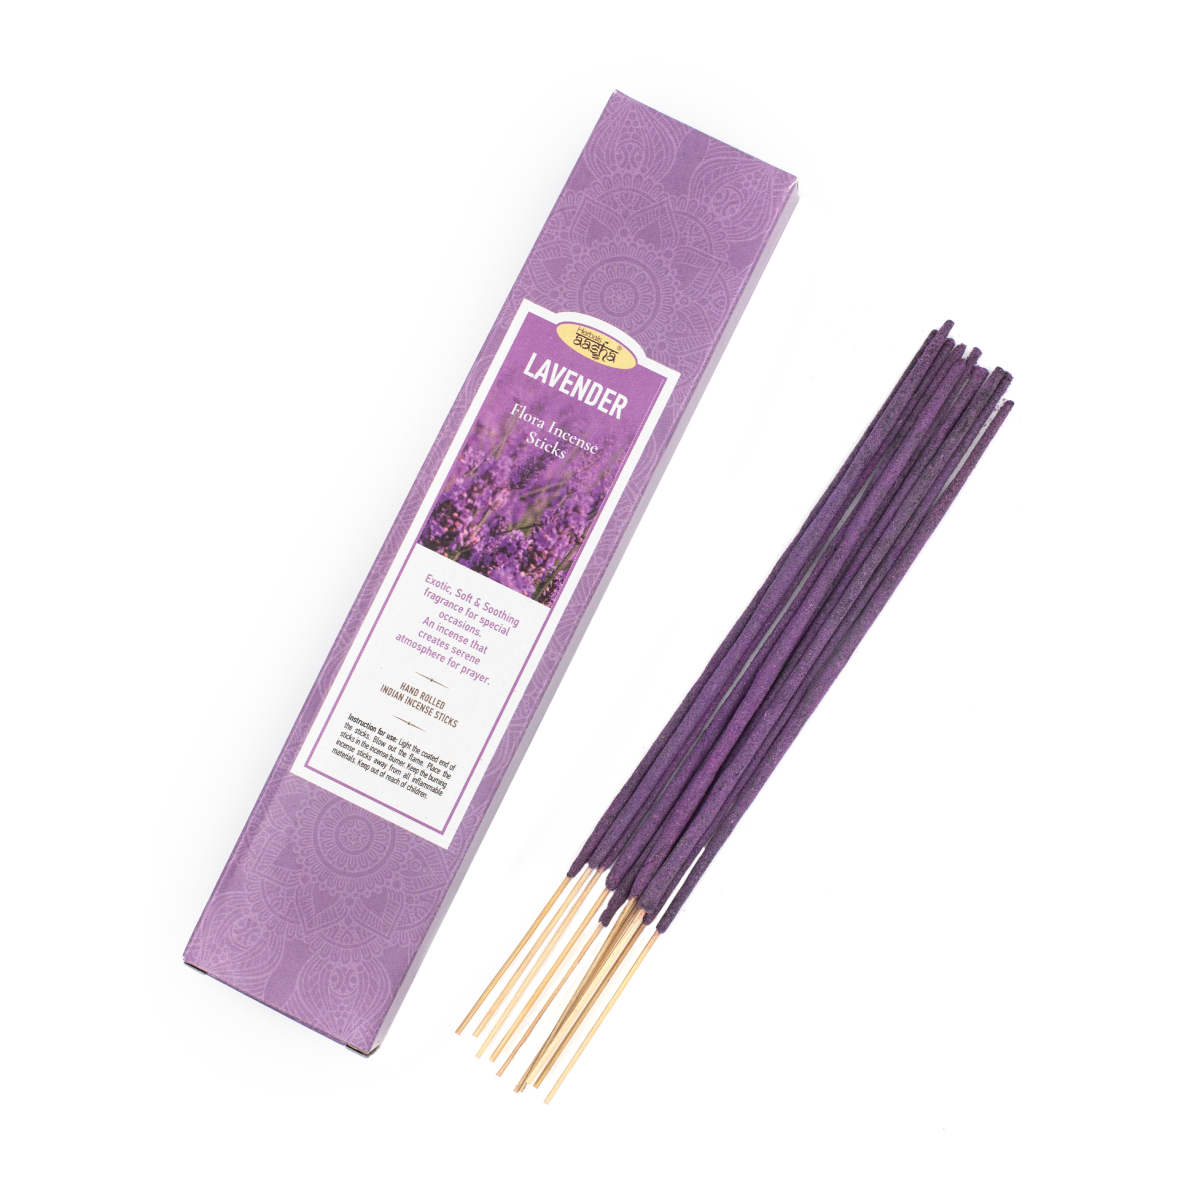 Ароматические палочки Aasha Herbals Лаванда (Lavender), 10 шт ароматические палочки aasha herbals гвоздика clove 10 шт